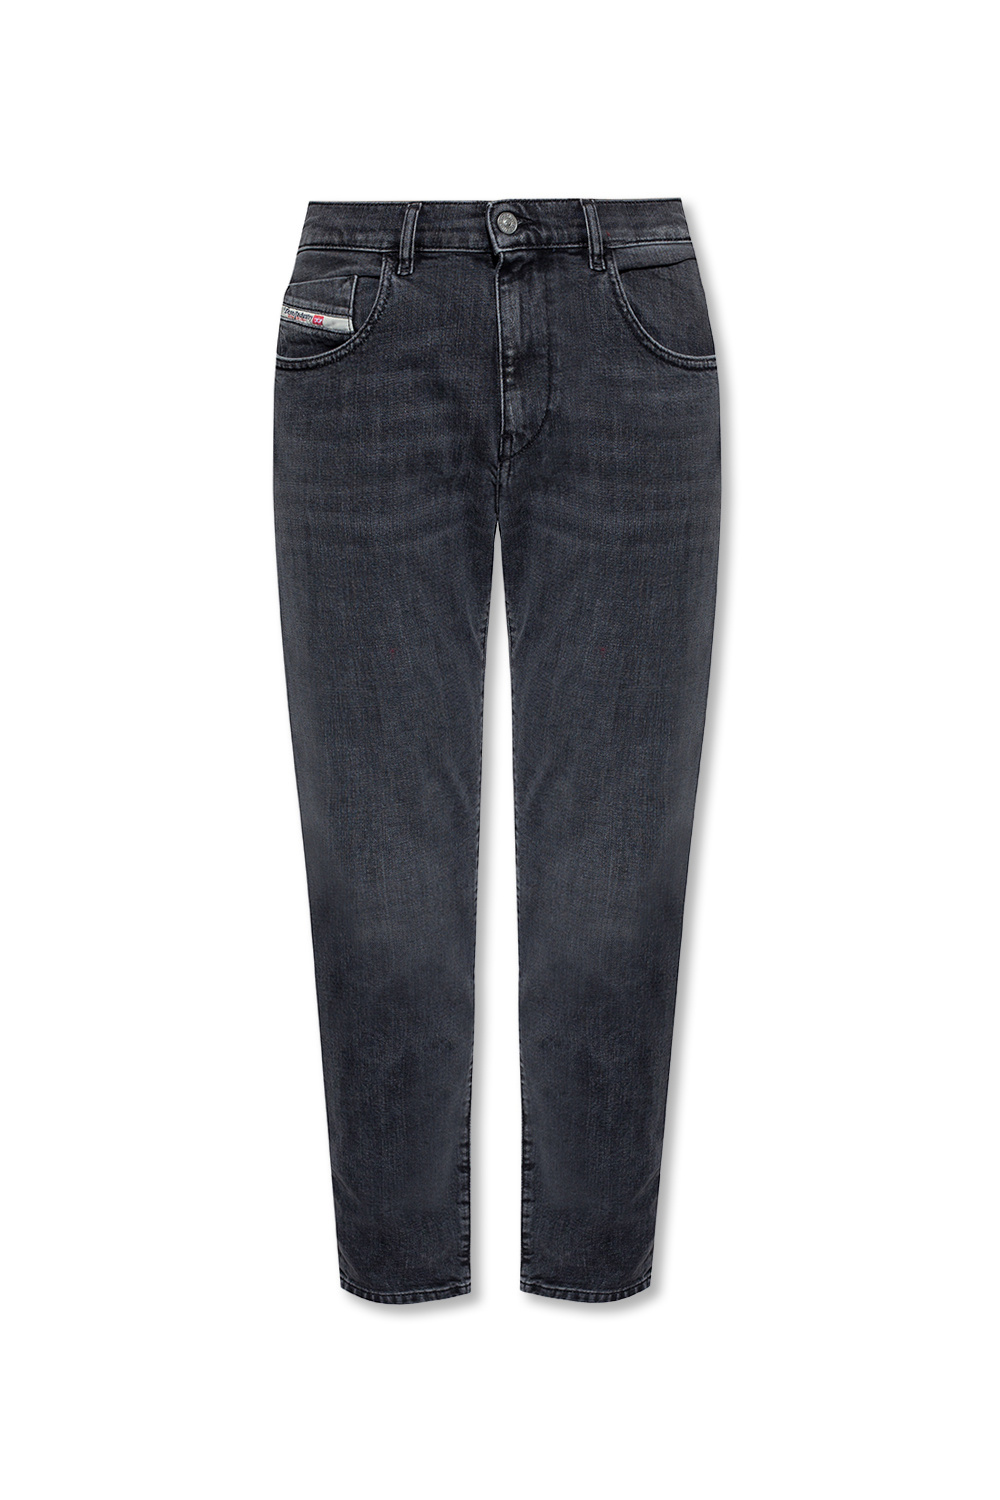 fit jeans Diesel - GenesinlifeShops Greenland - Strukt' slim - '2019 D -  Vestido Jeans Feminino Com Decote O Rei do Brás